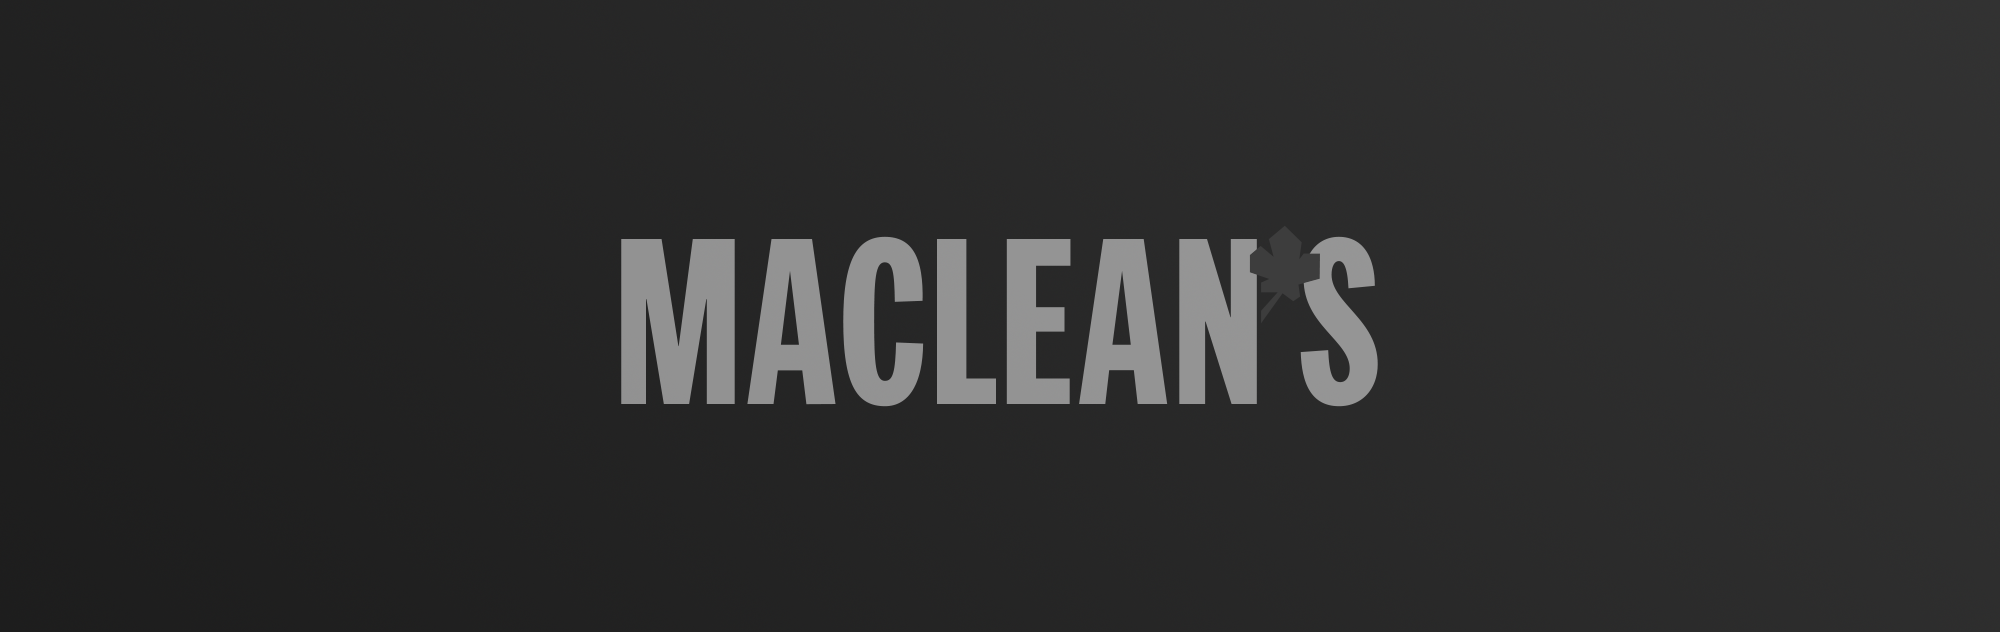 Maclean's logo on dark gradient background